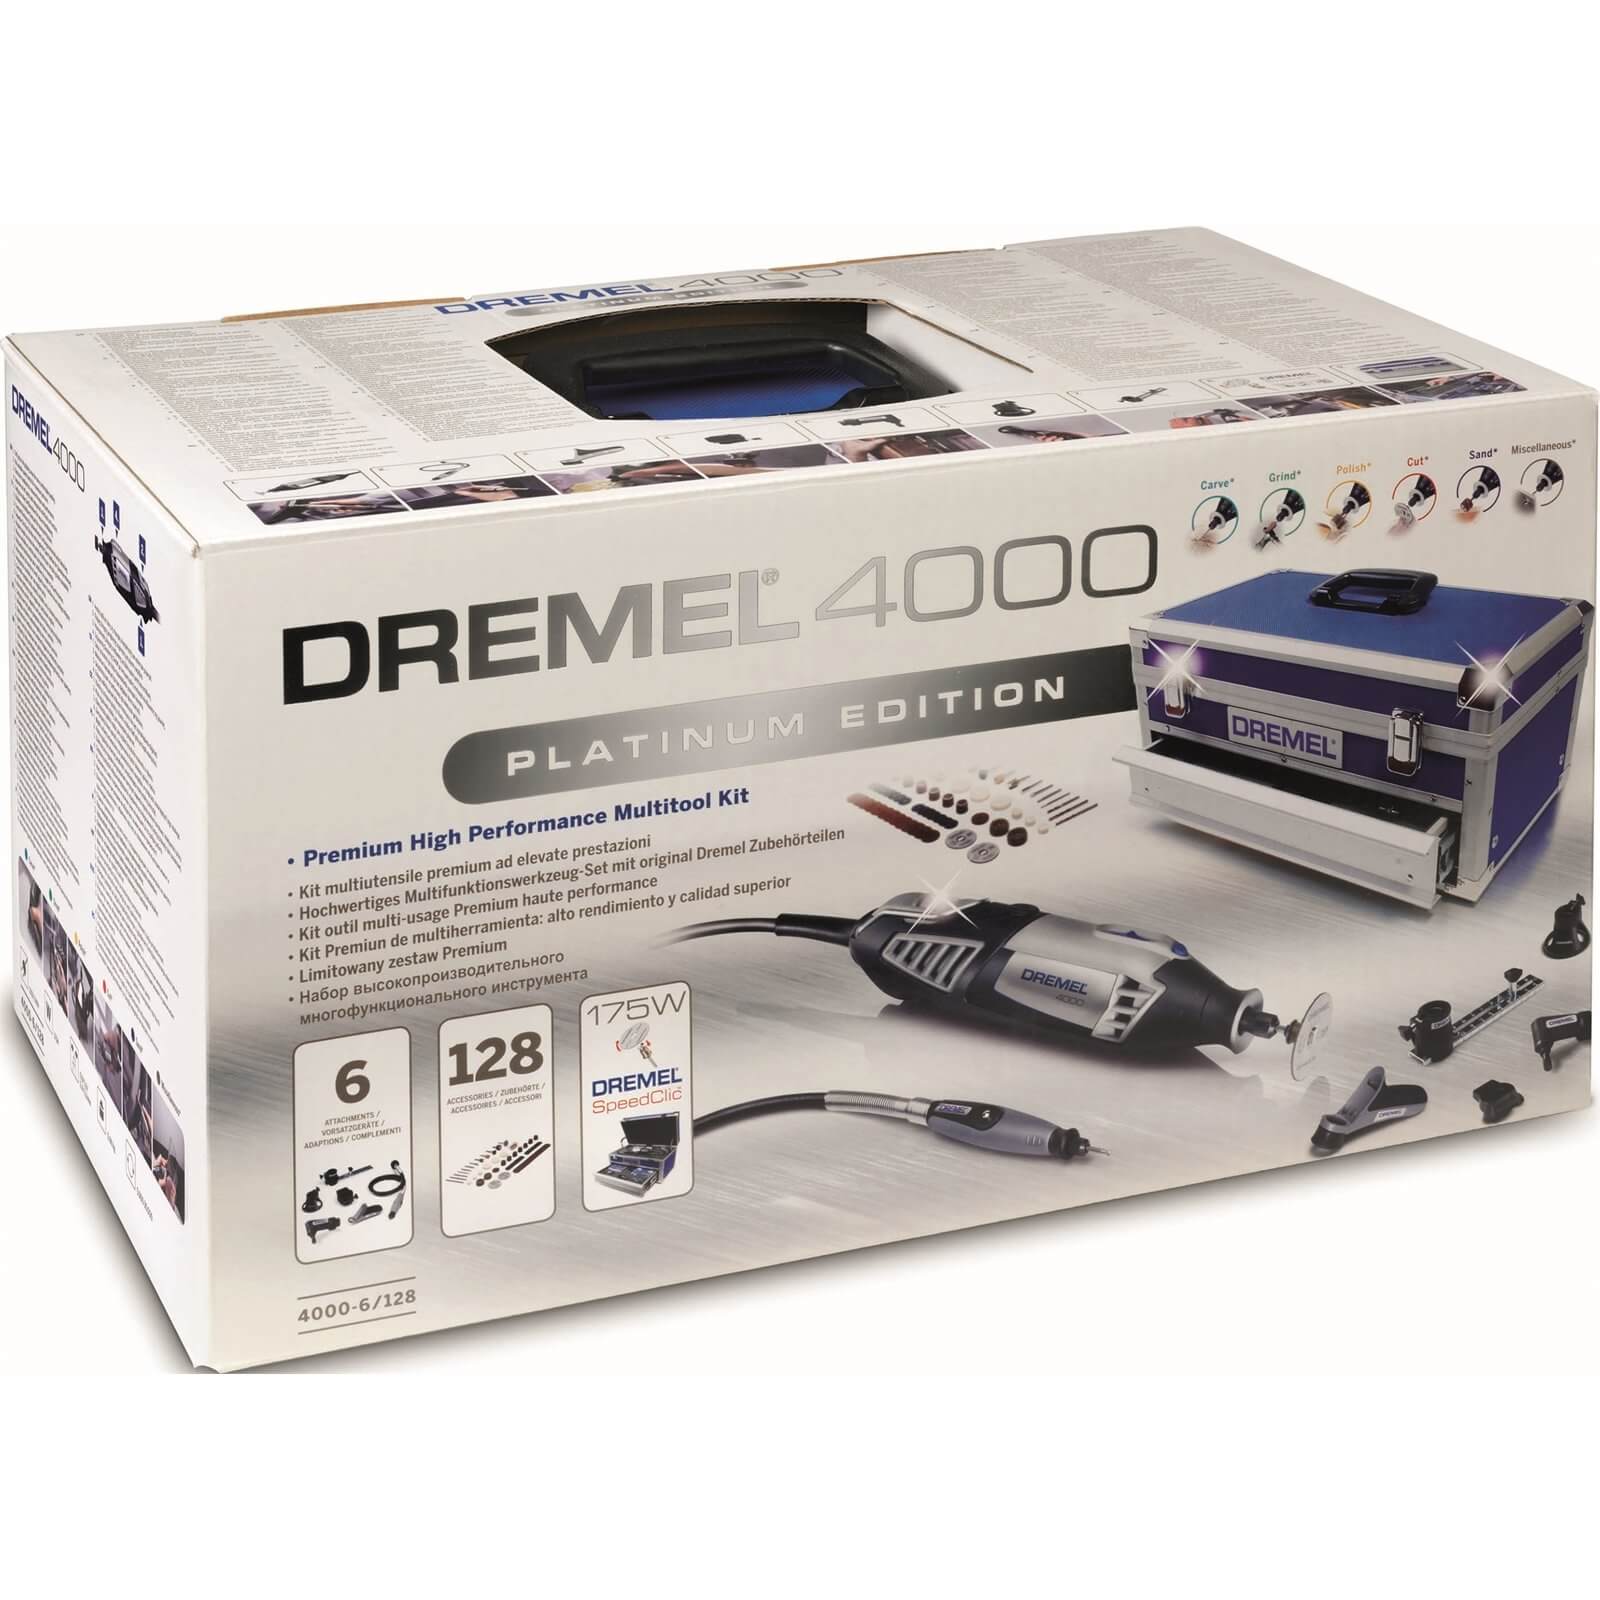 Dremel 4000-6/128 Multi-Tool Platinum Kit